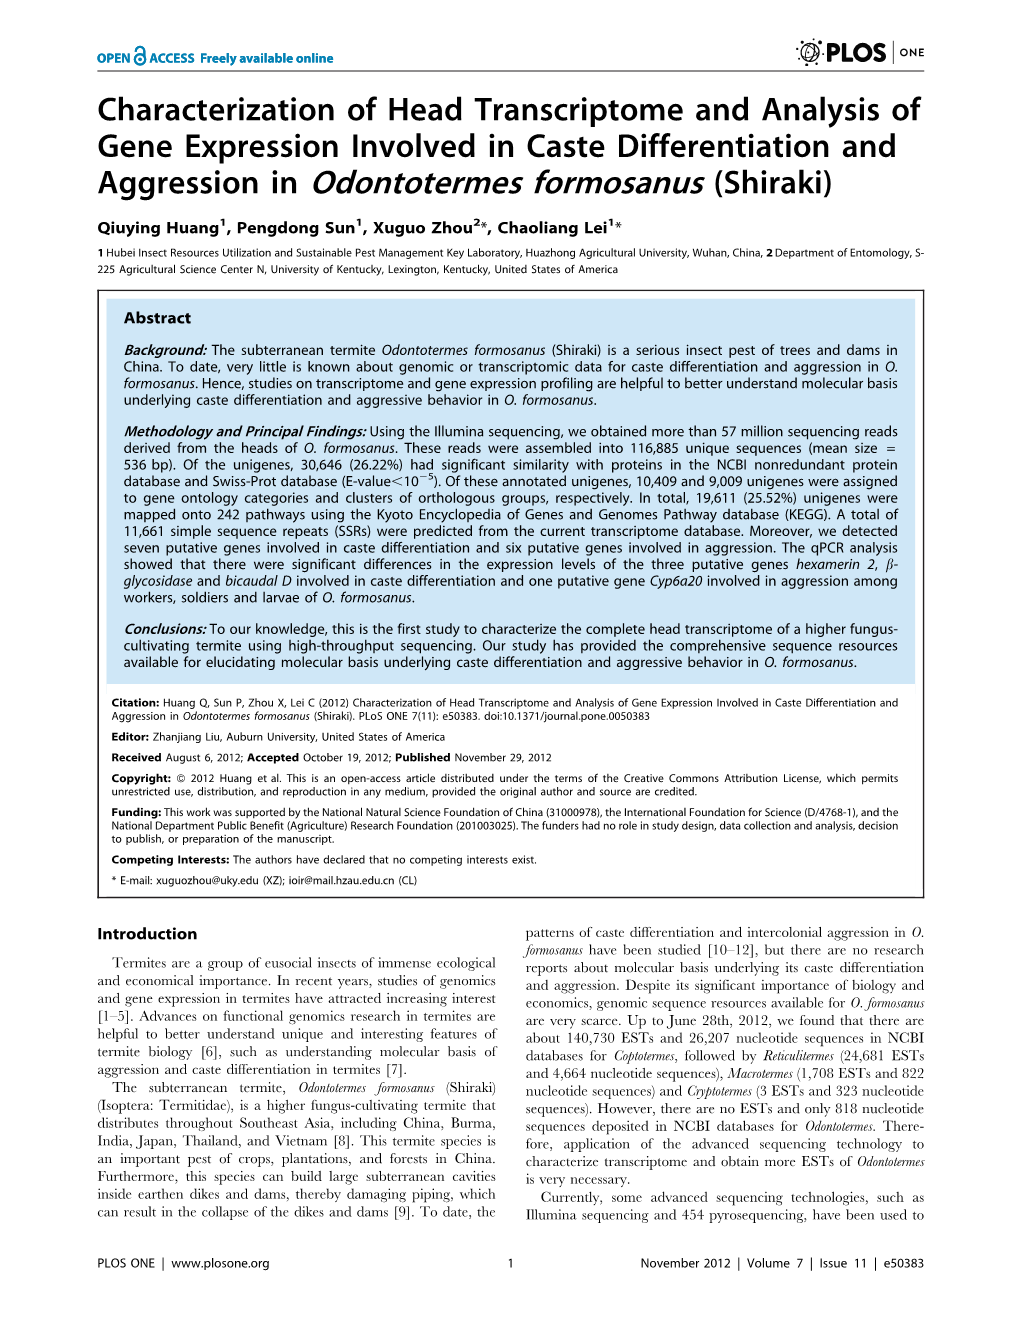 Aggression in Odontotermes Formosanus (Shiraki)